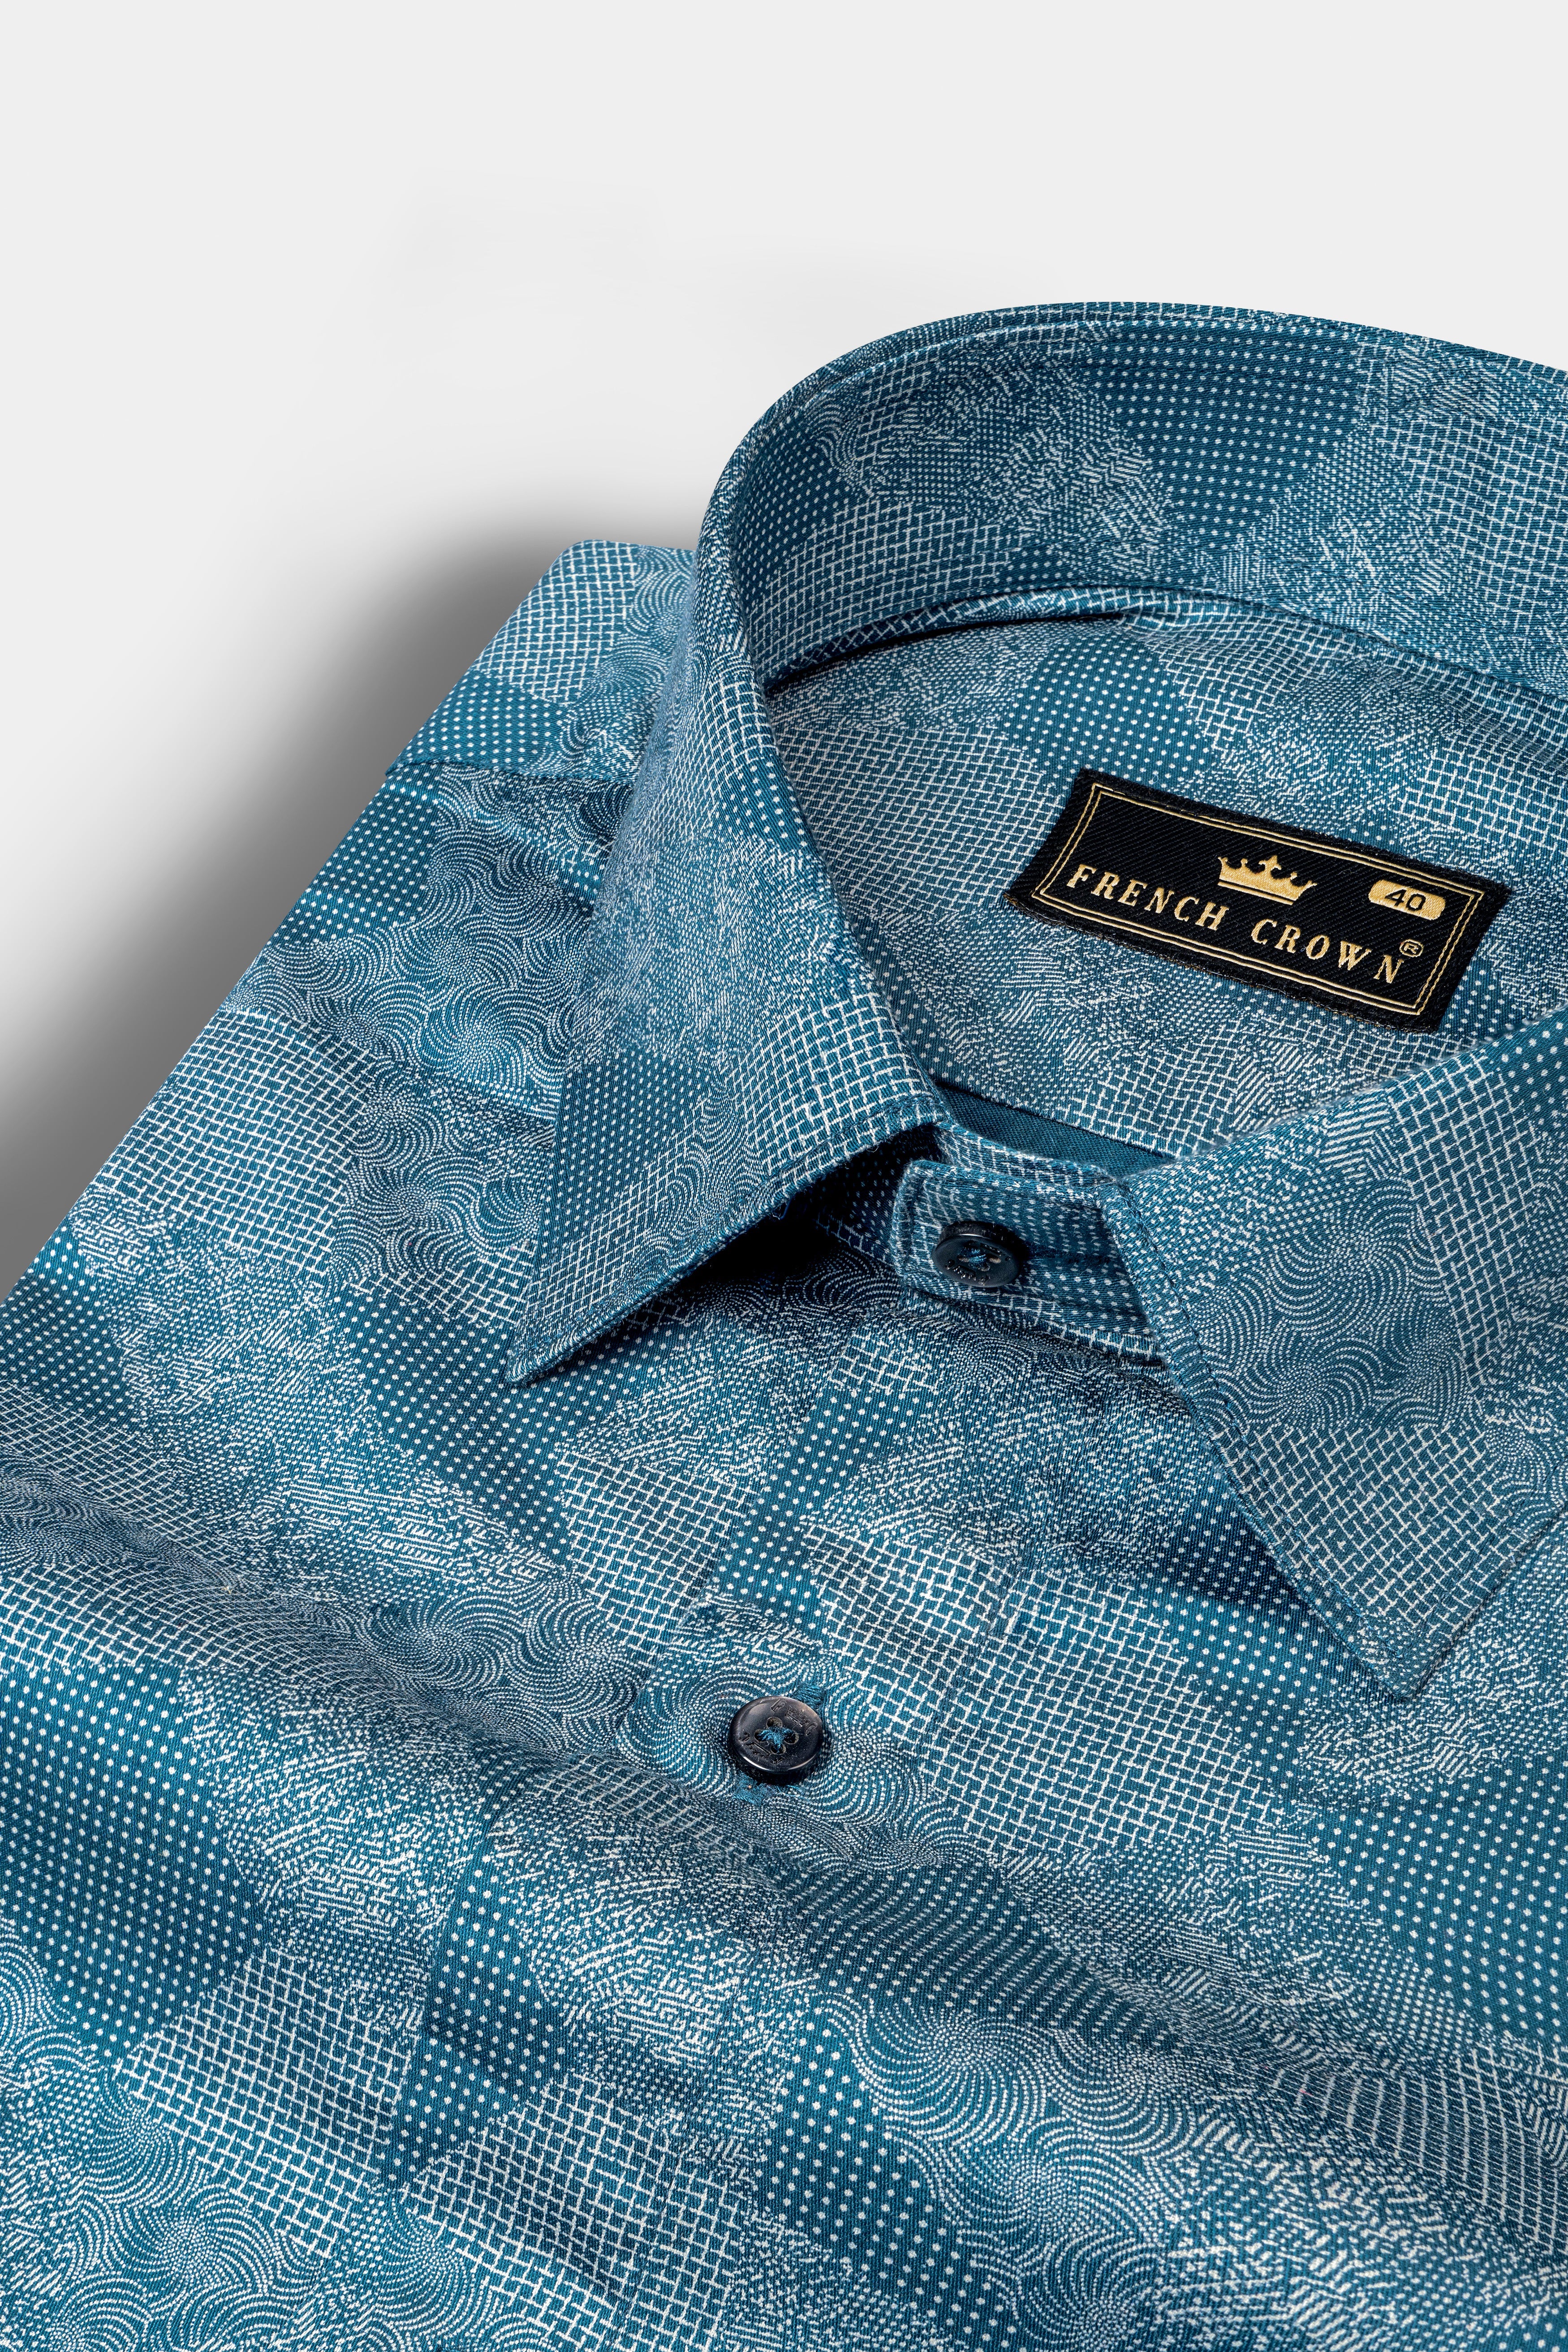 Astronaut Blue Printed Super Soft Premium Cotton Shirt